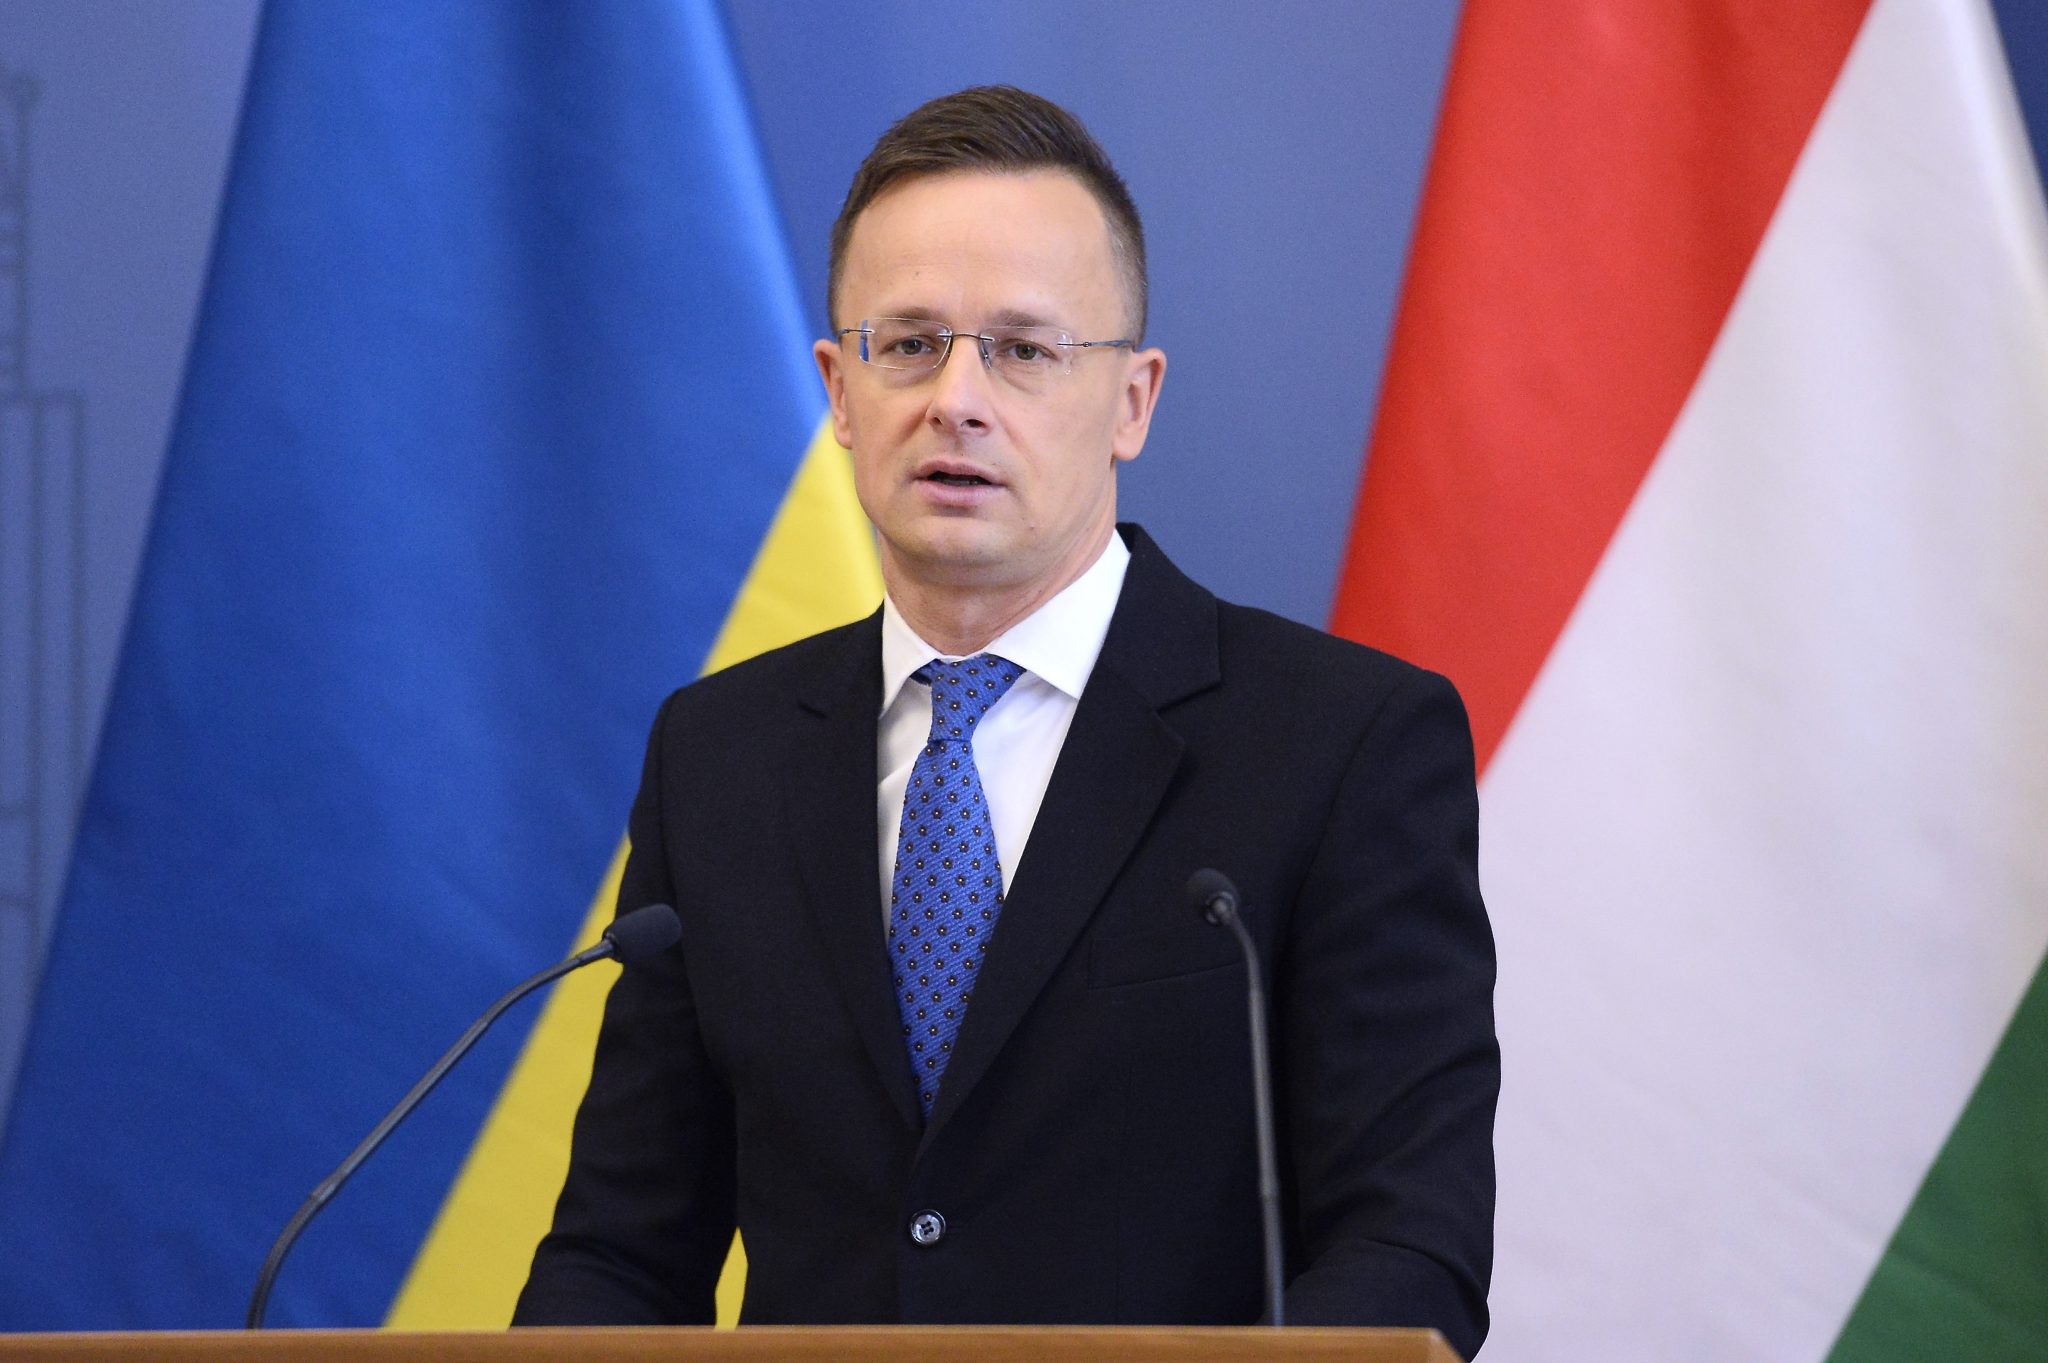 FM Szijjártó: Hungary 'Generous' in Its Support of Ukraine